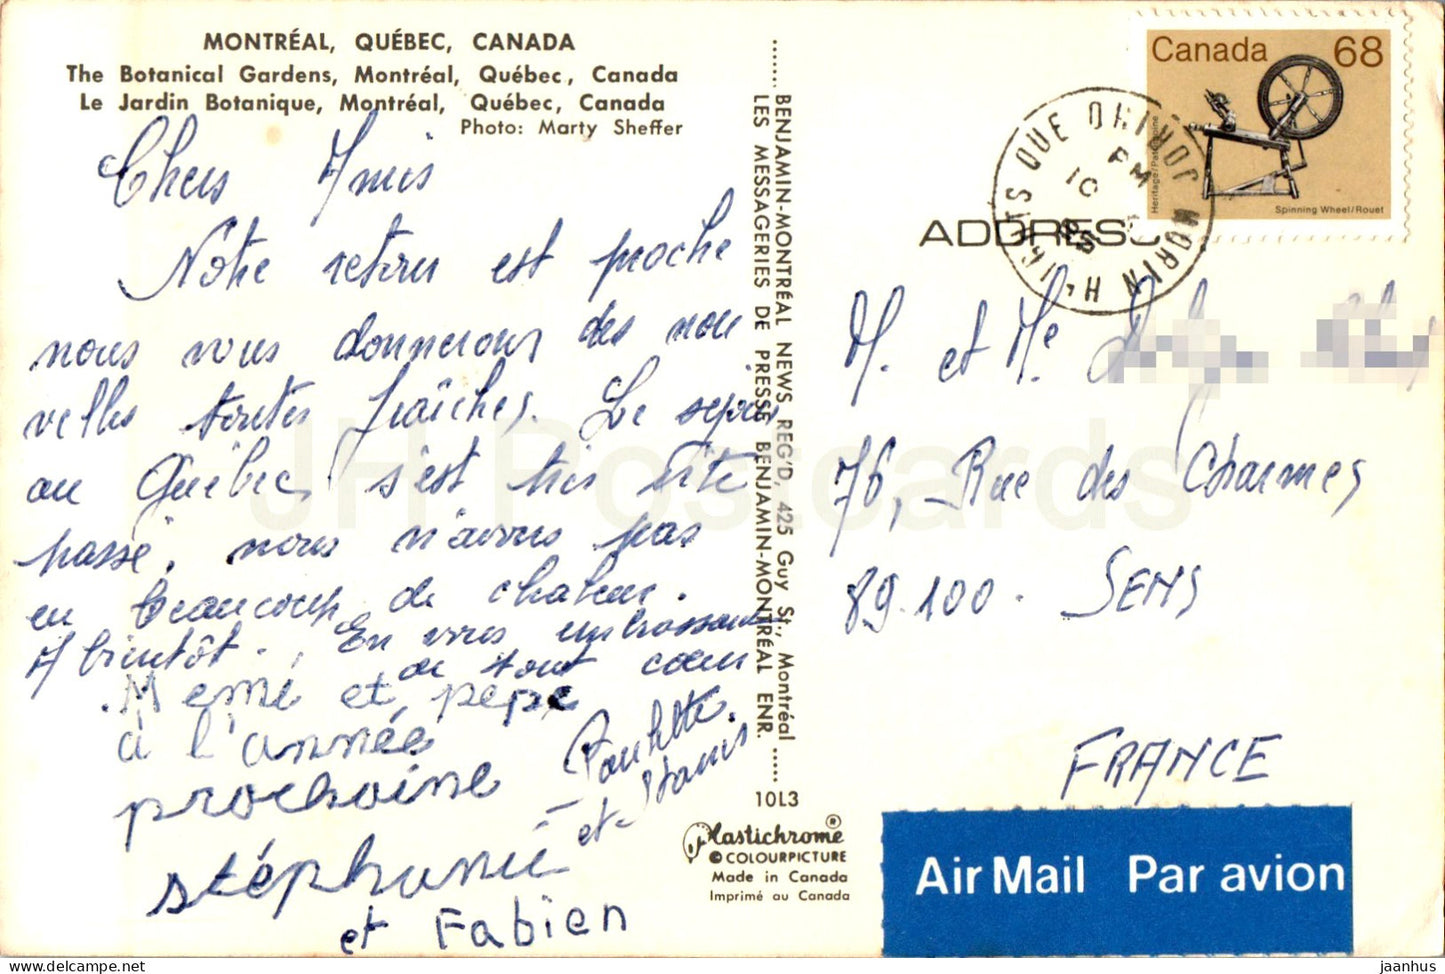 Montreal – The Botanical Gardens – Le Jardin Botanique – 10L3 – 1984 – Kanada – gebraucht 